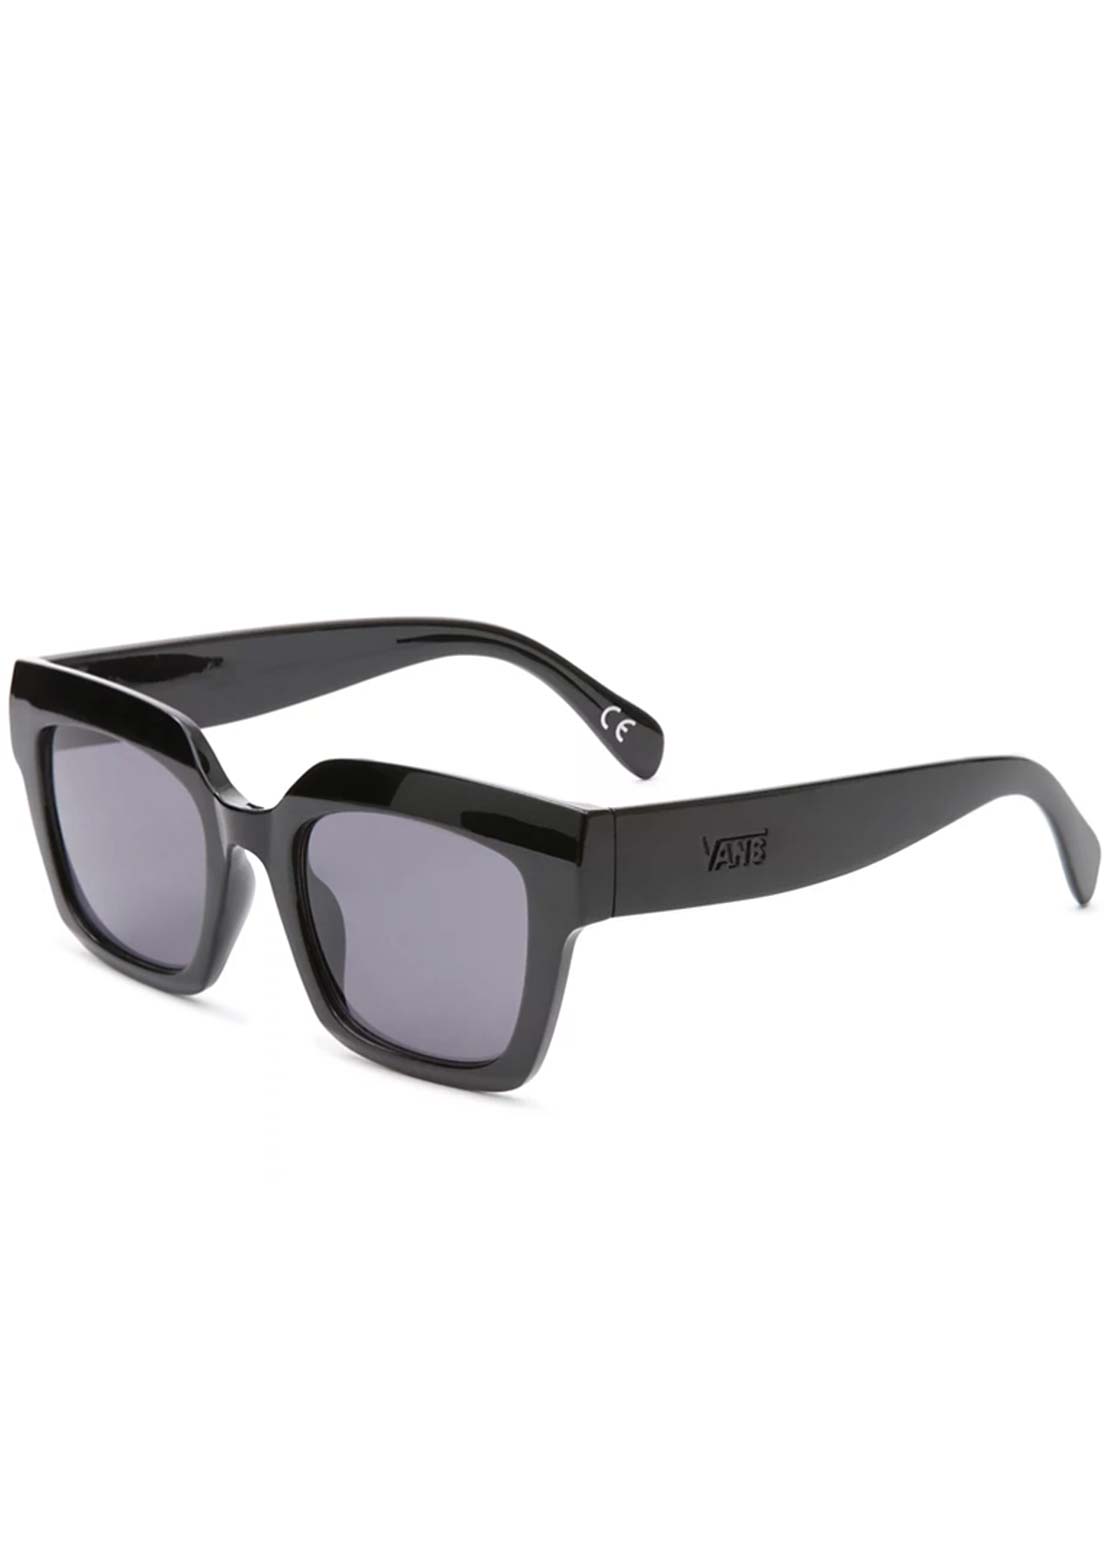 Vans Unisex Belden Shades Sunglasses Black